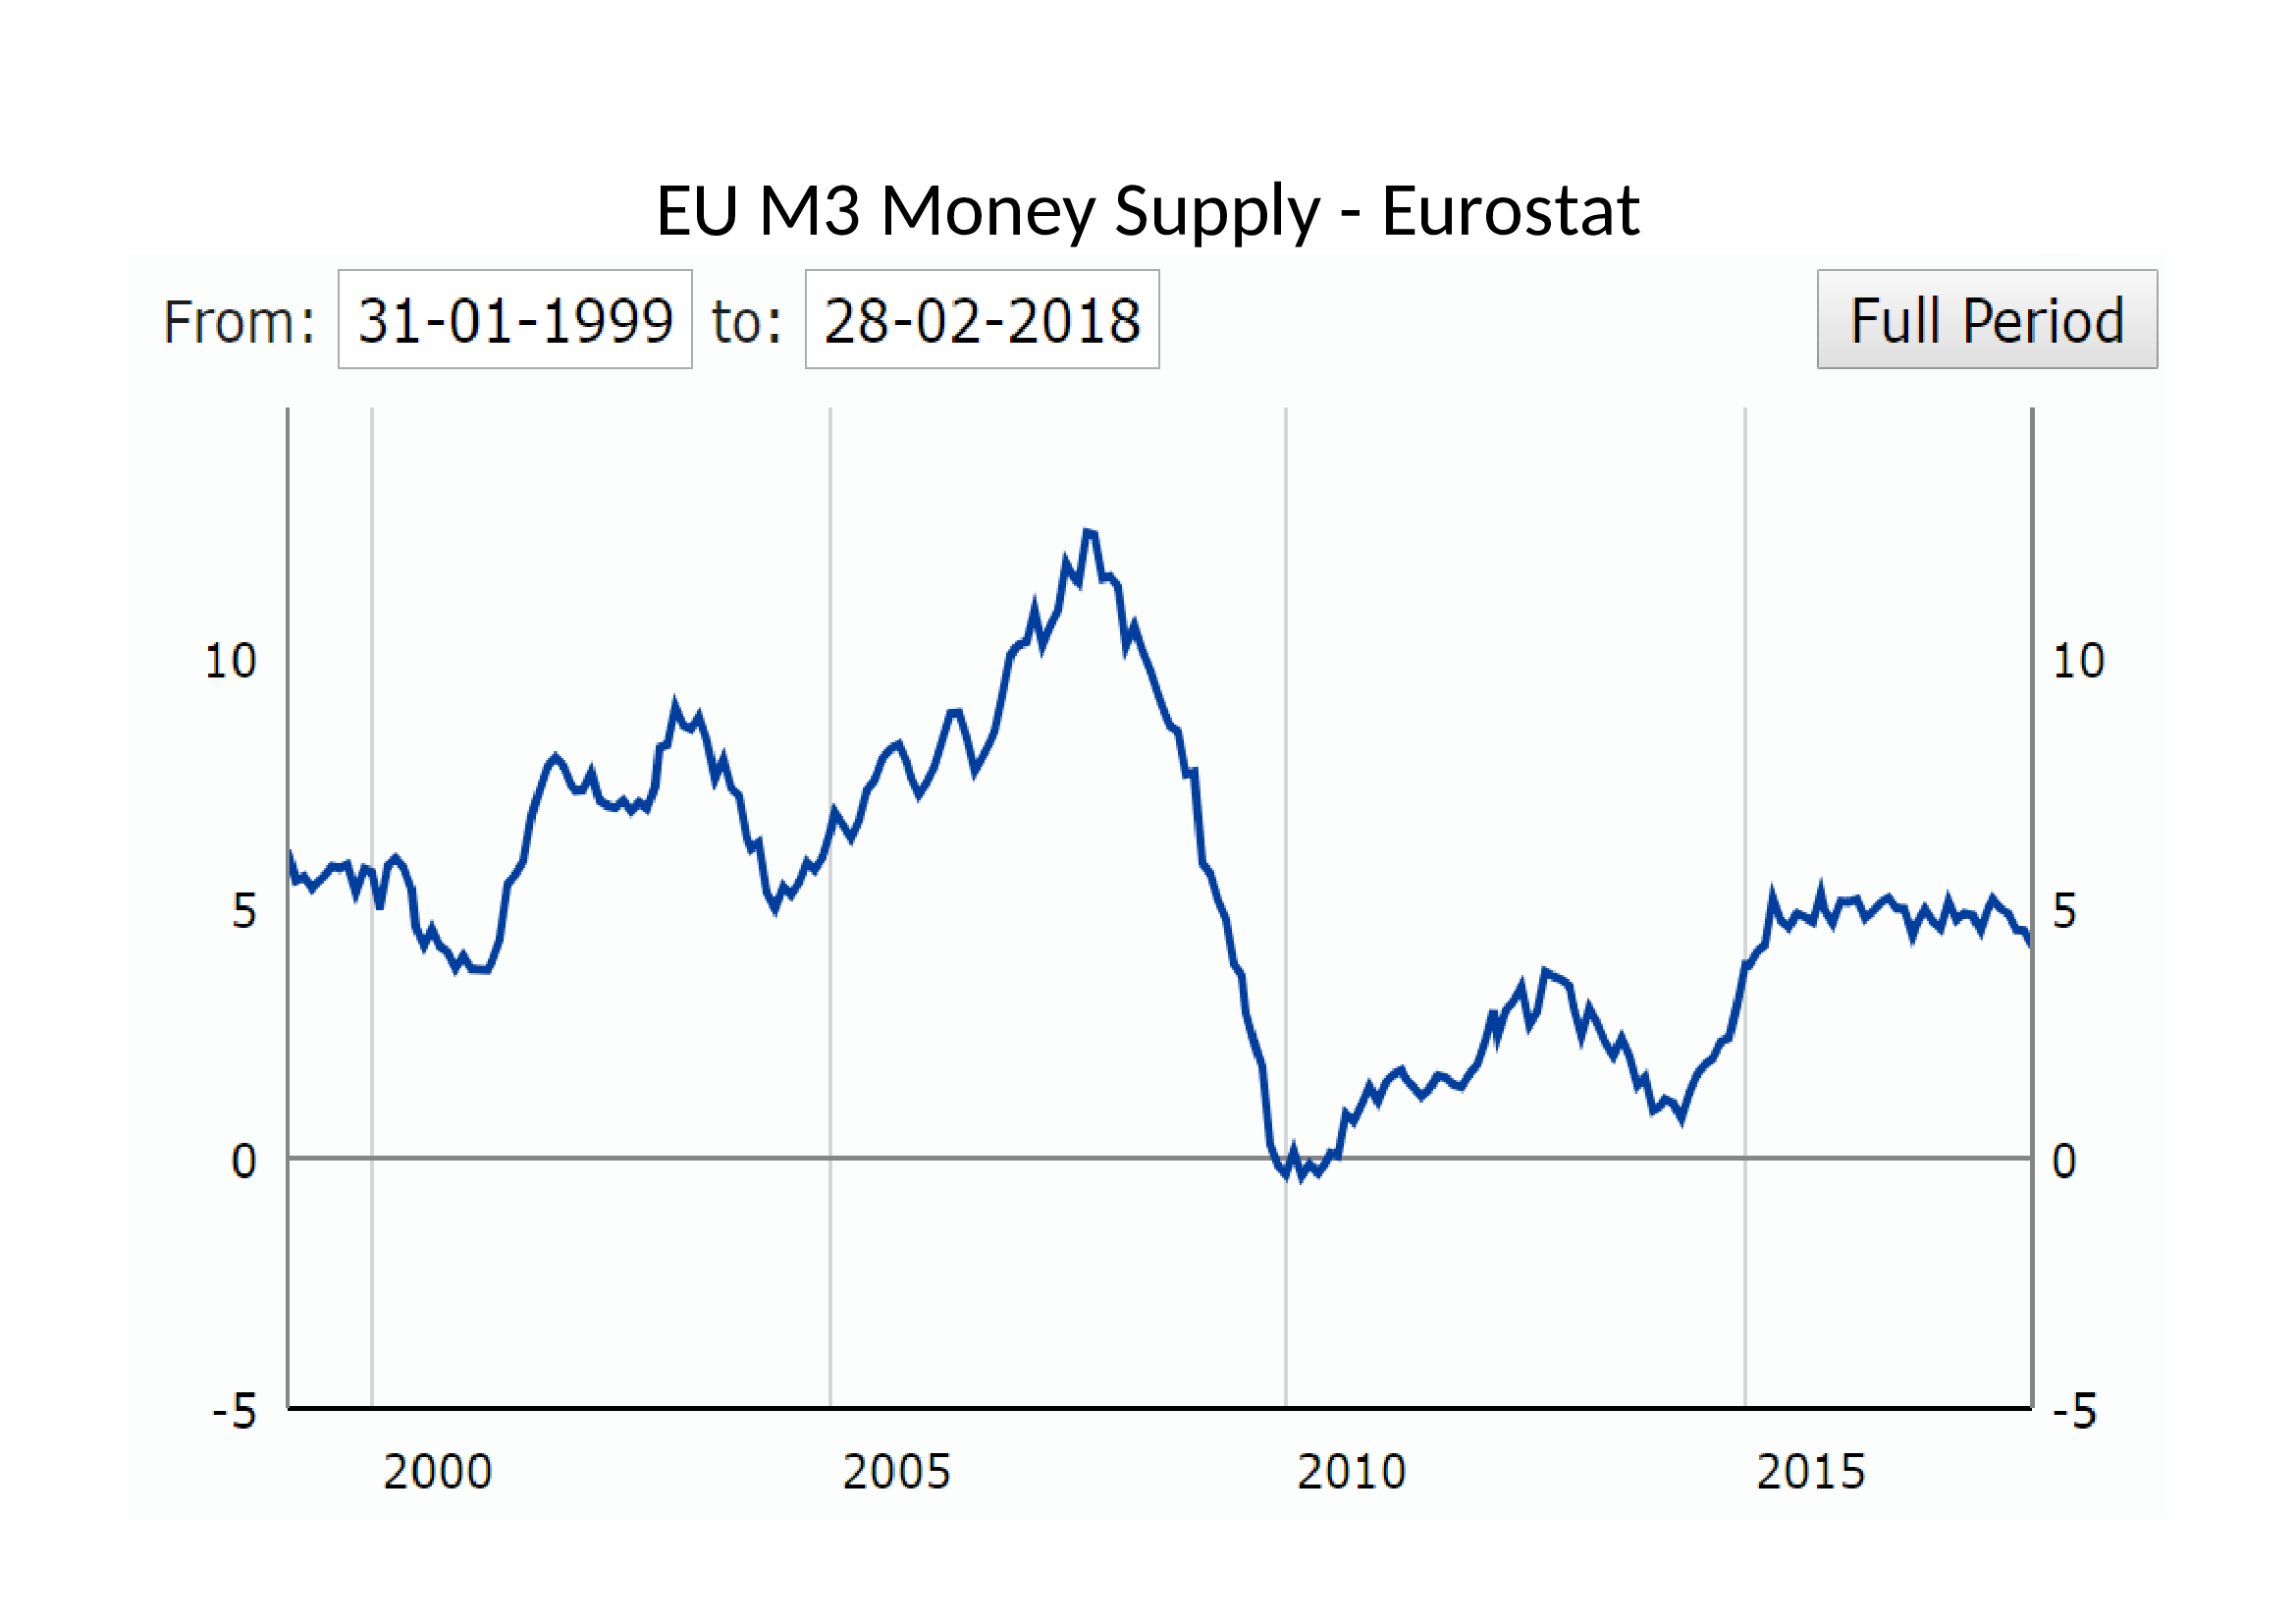 M3 Money Supply Chart